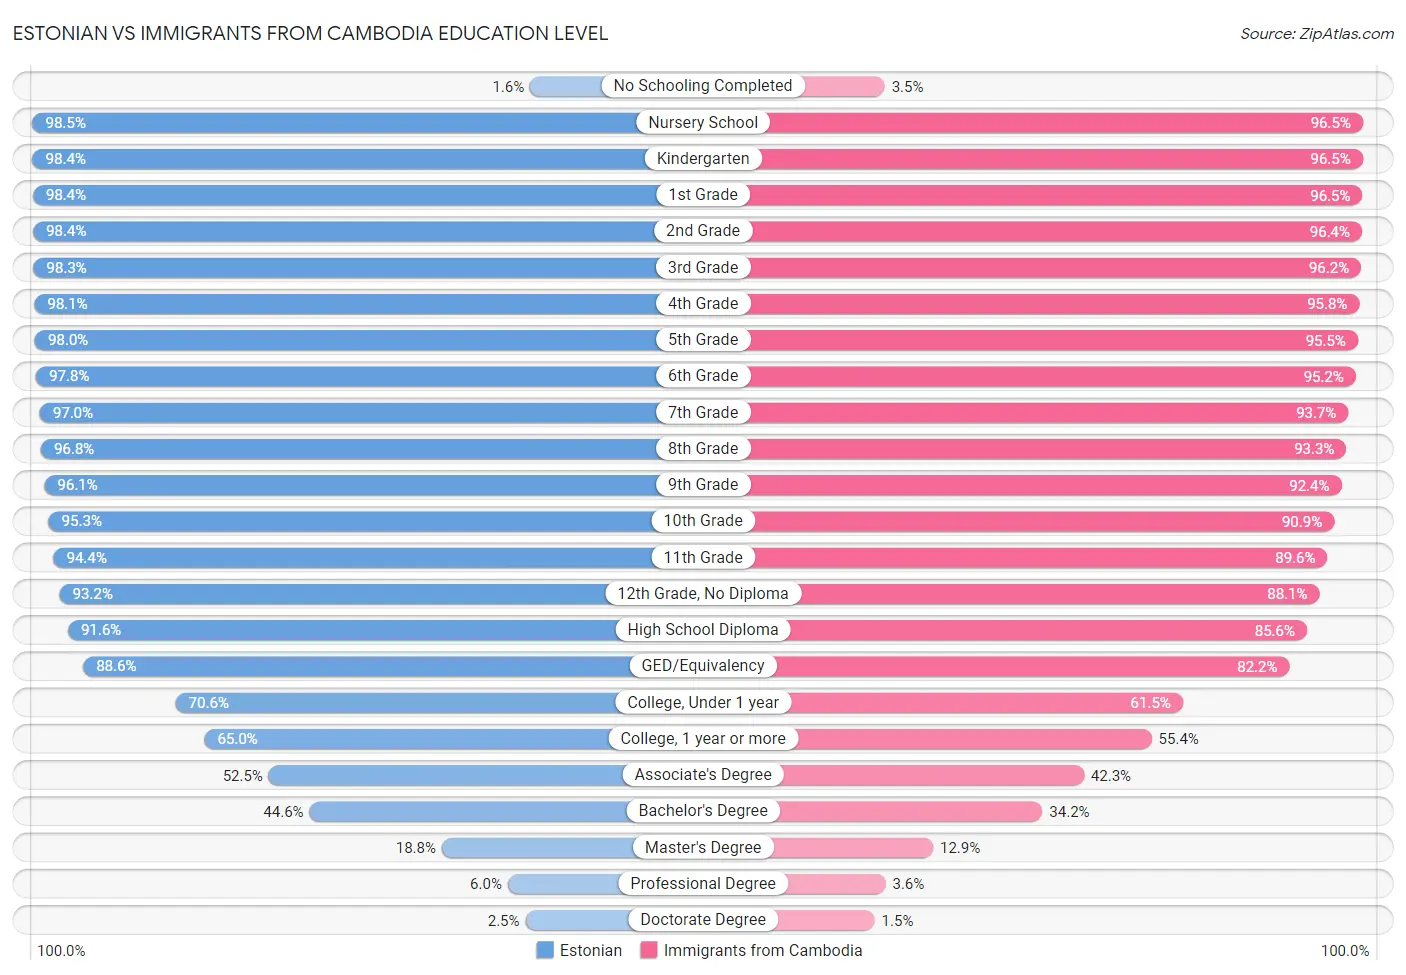 Estonian vs Immigrants from Cambodia Education Level